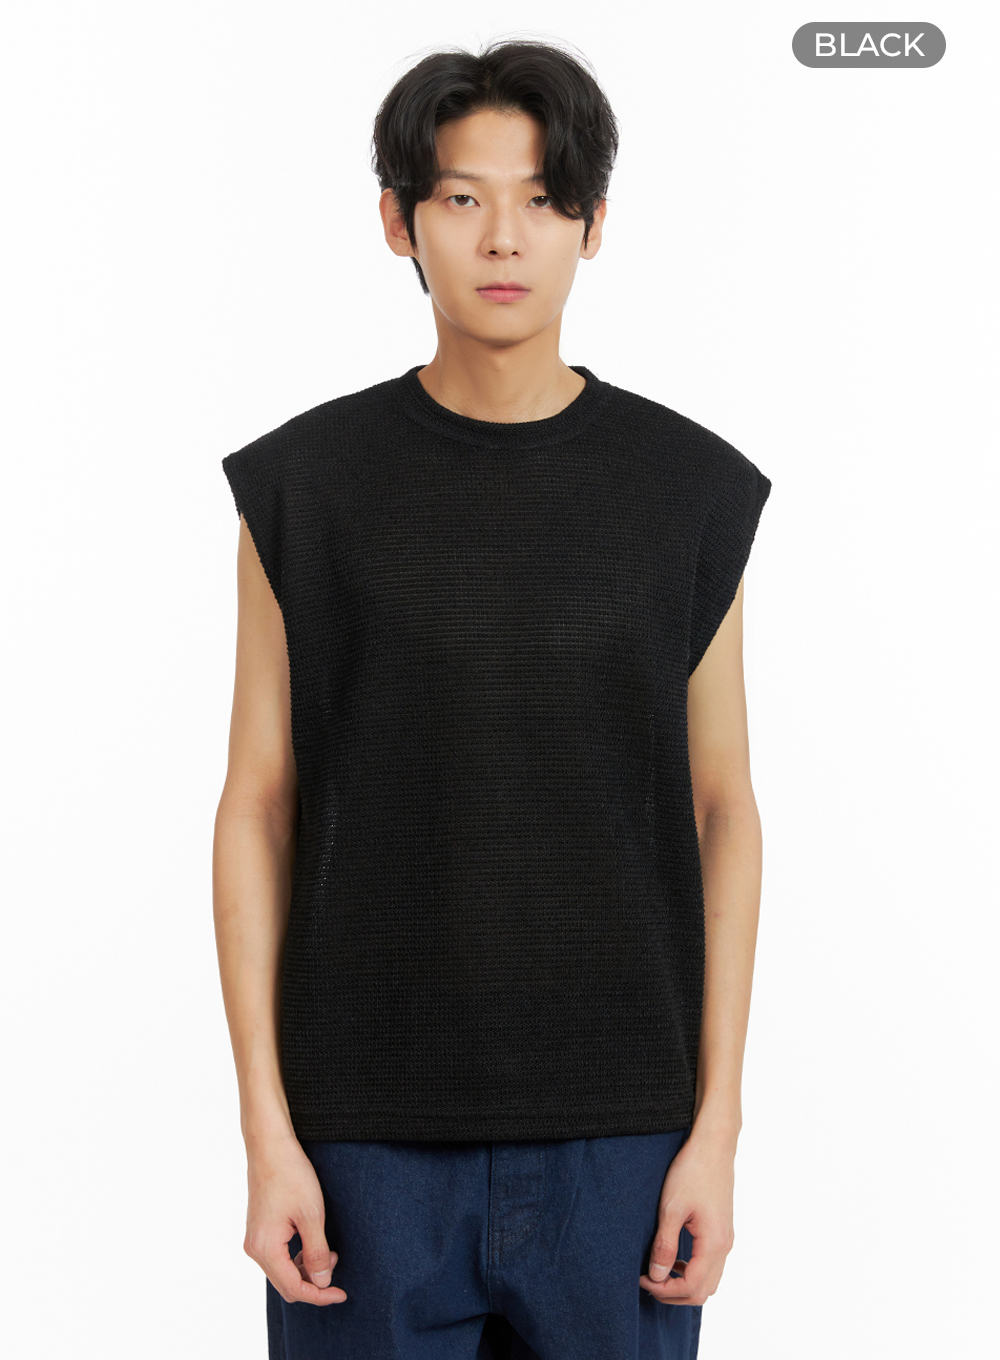 mens-knit-vest-ia402 / Black